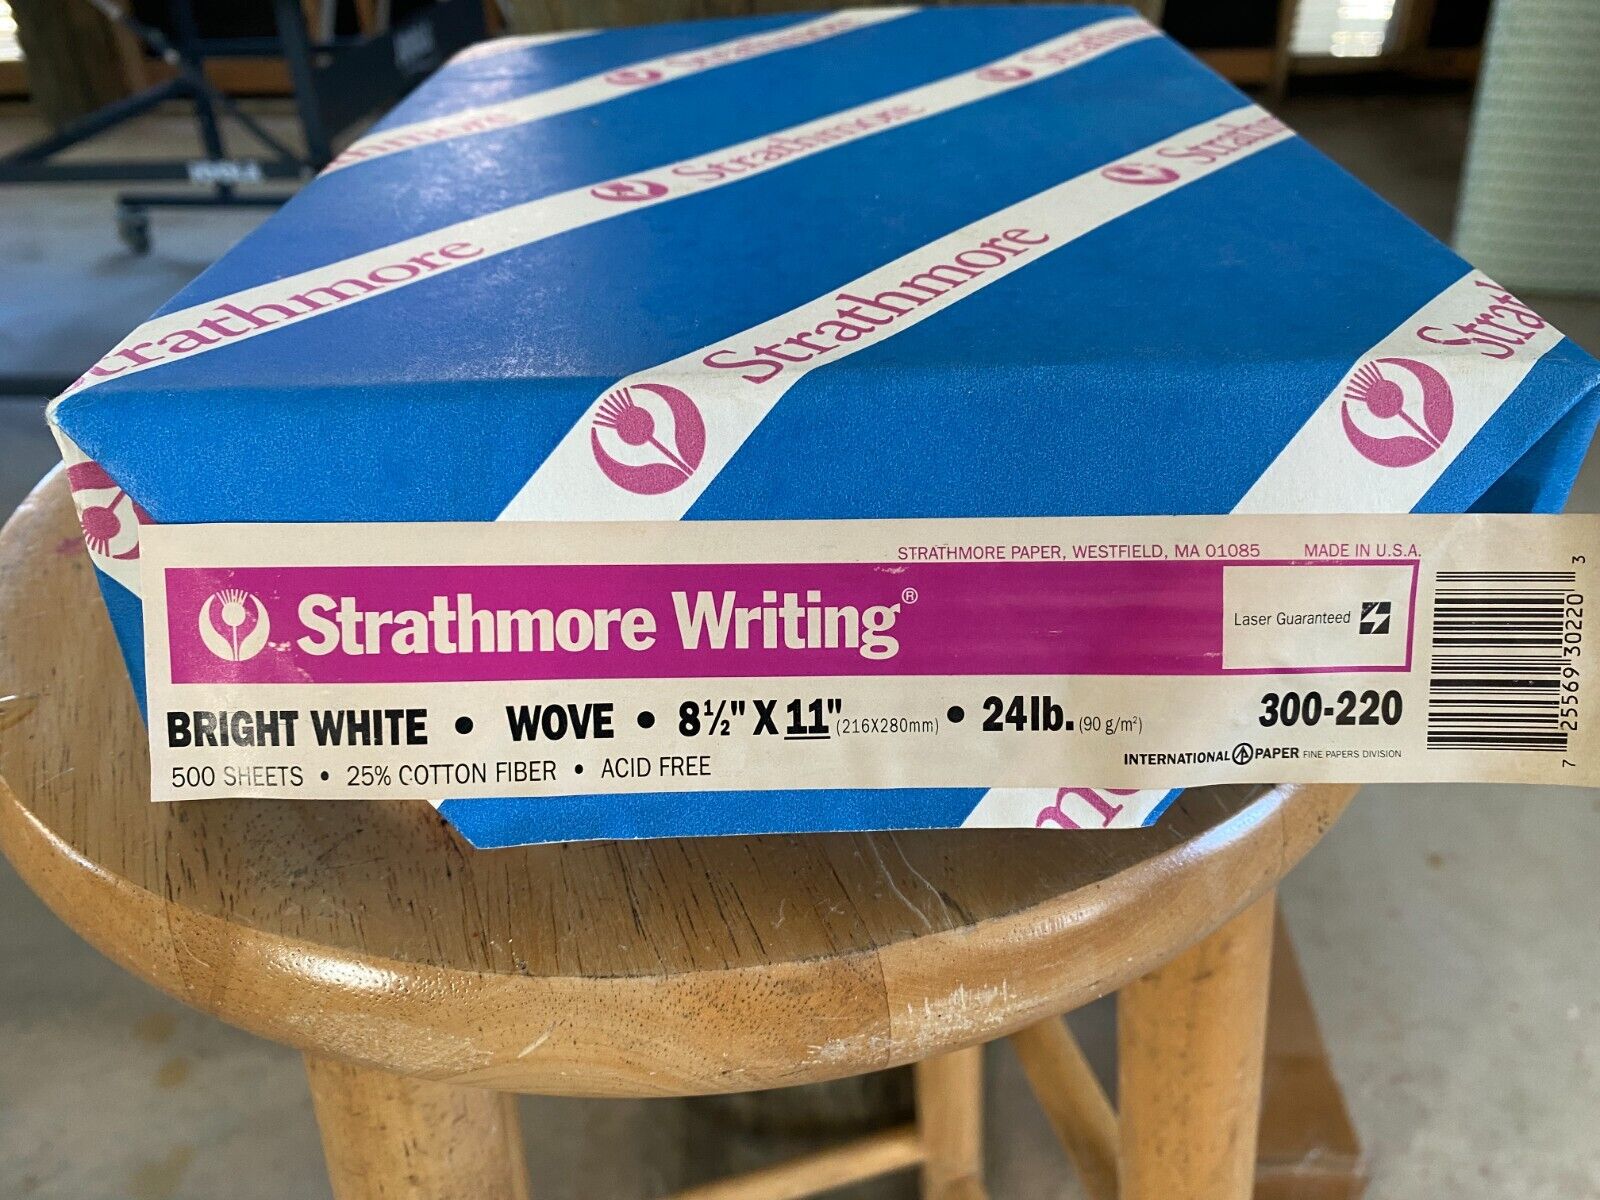 Strathmore Writing Bright White Wove 25% Cotton Fiber 24lb Cockle Paper 8.5 x 11